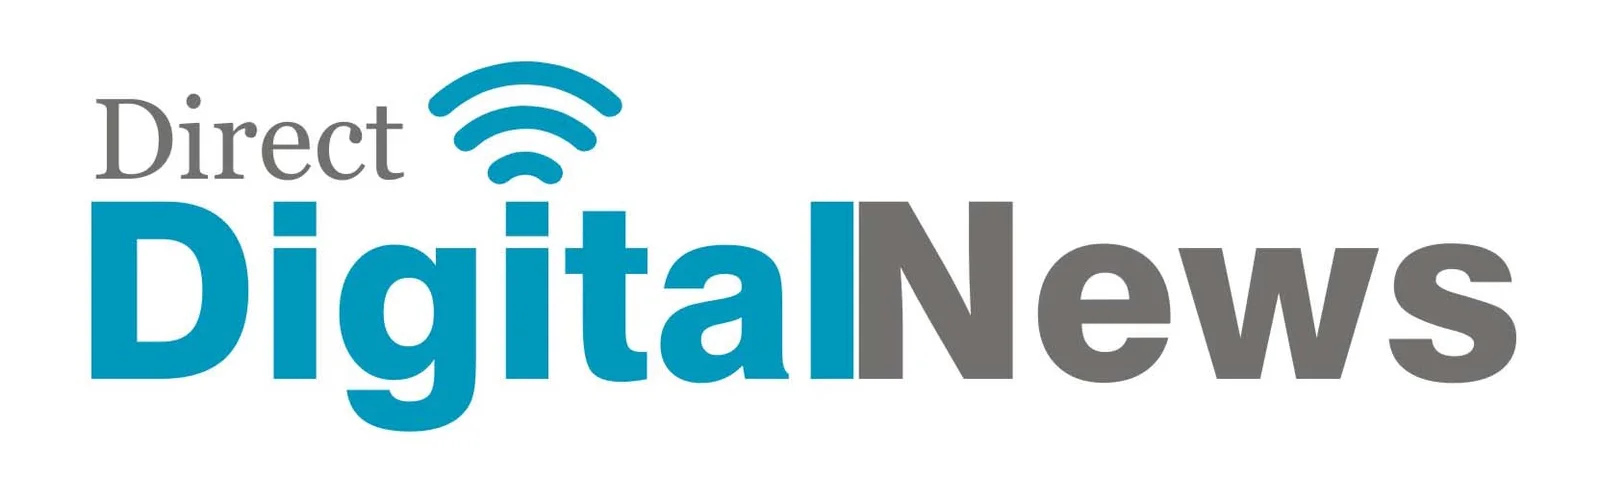 Direct-Digital-News-Logo